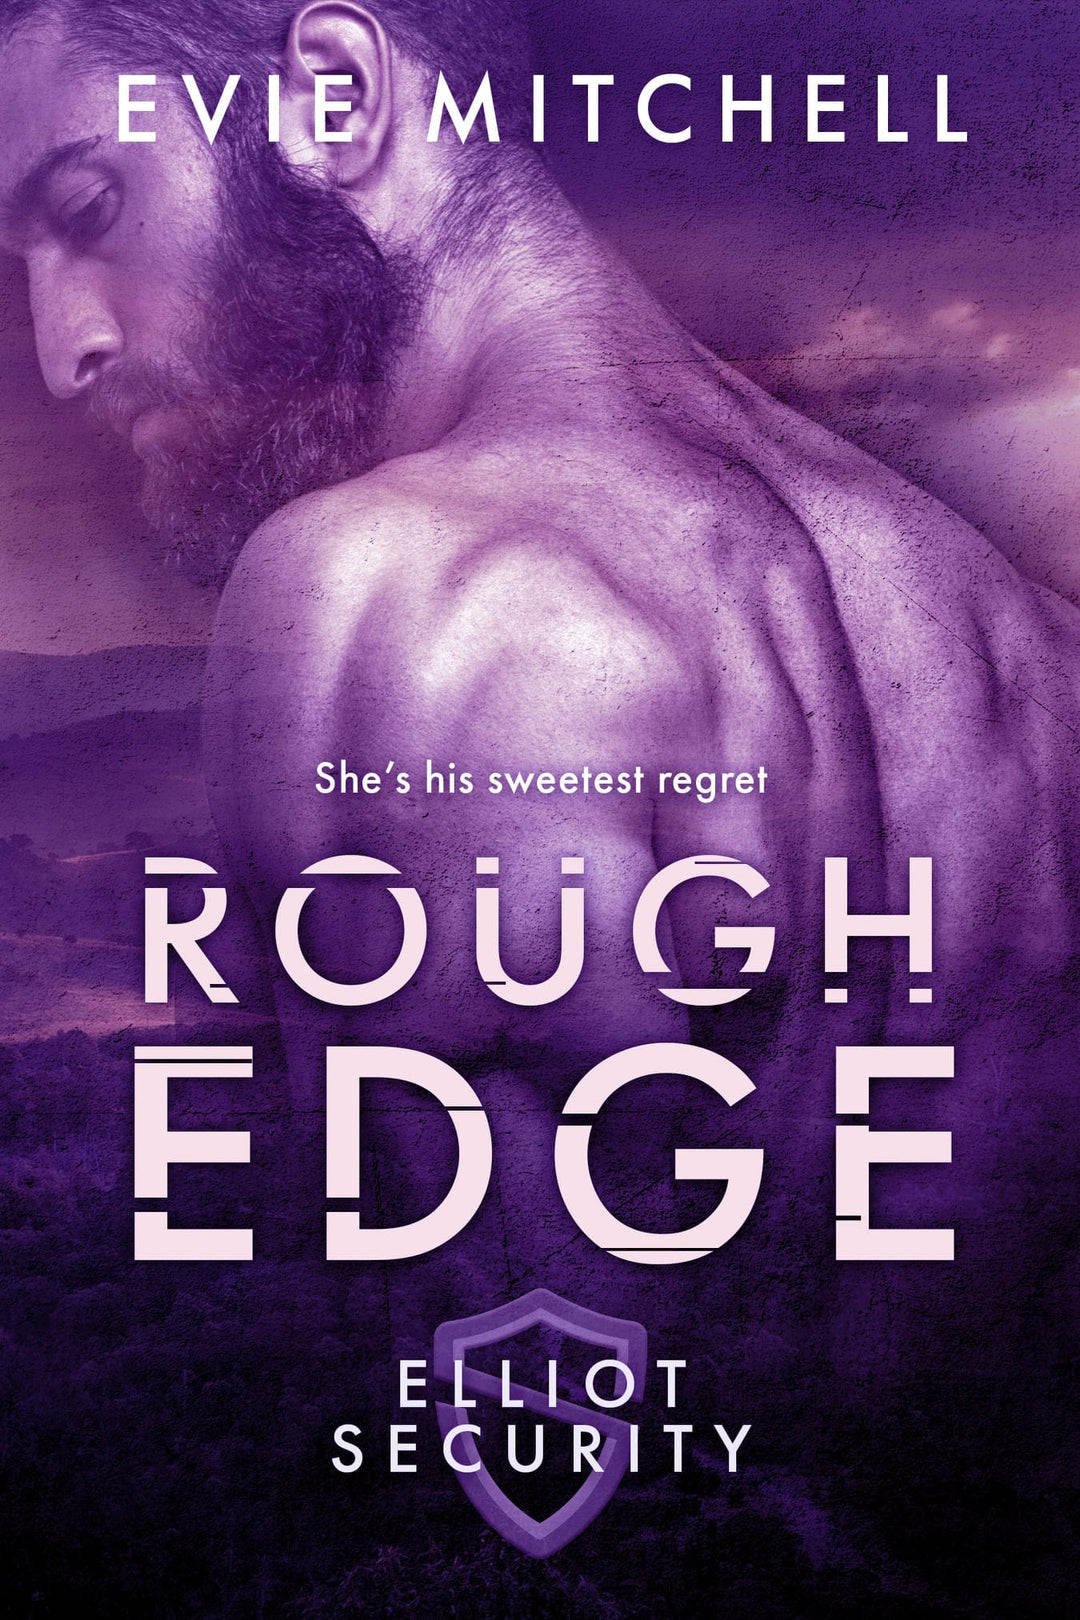 Evie Mitchell eBook Rough Edge (EBOOK)